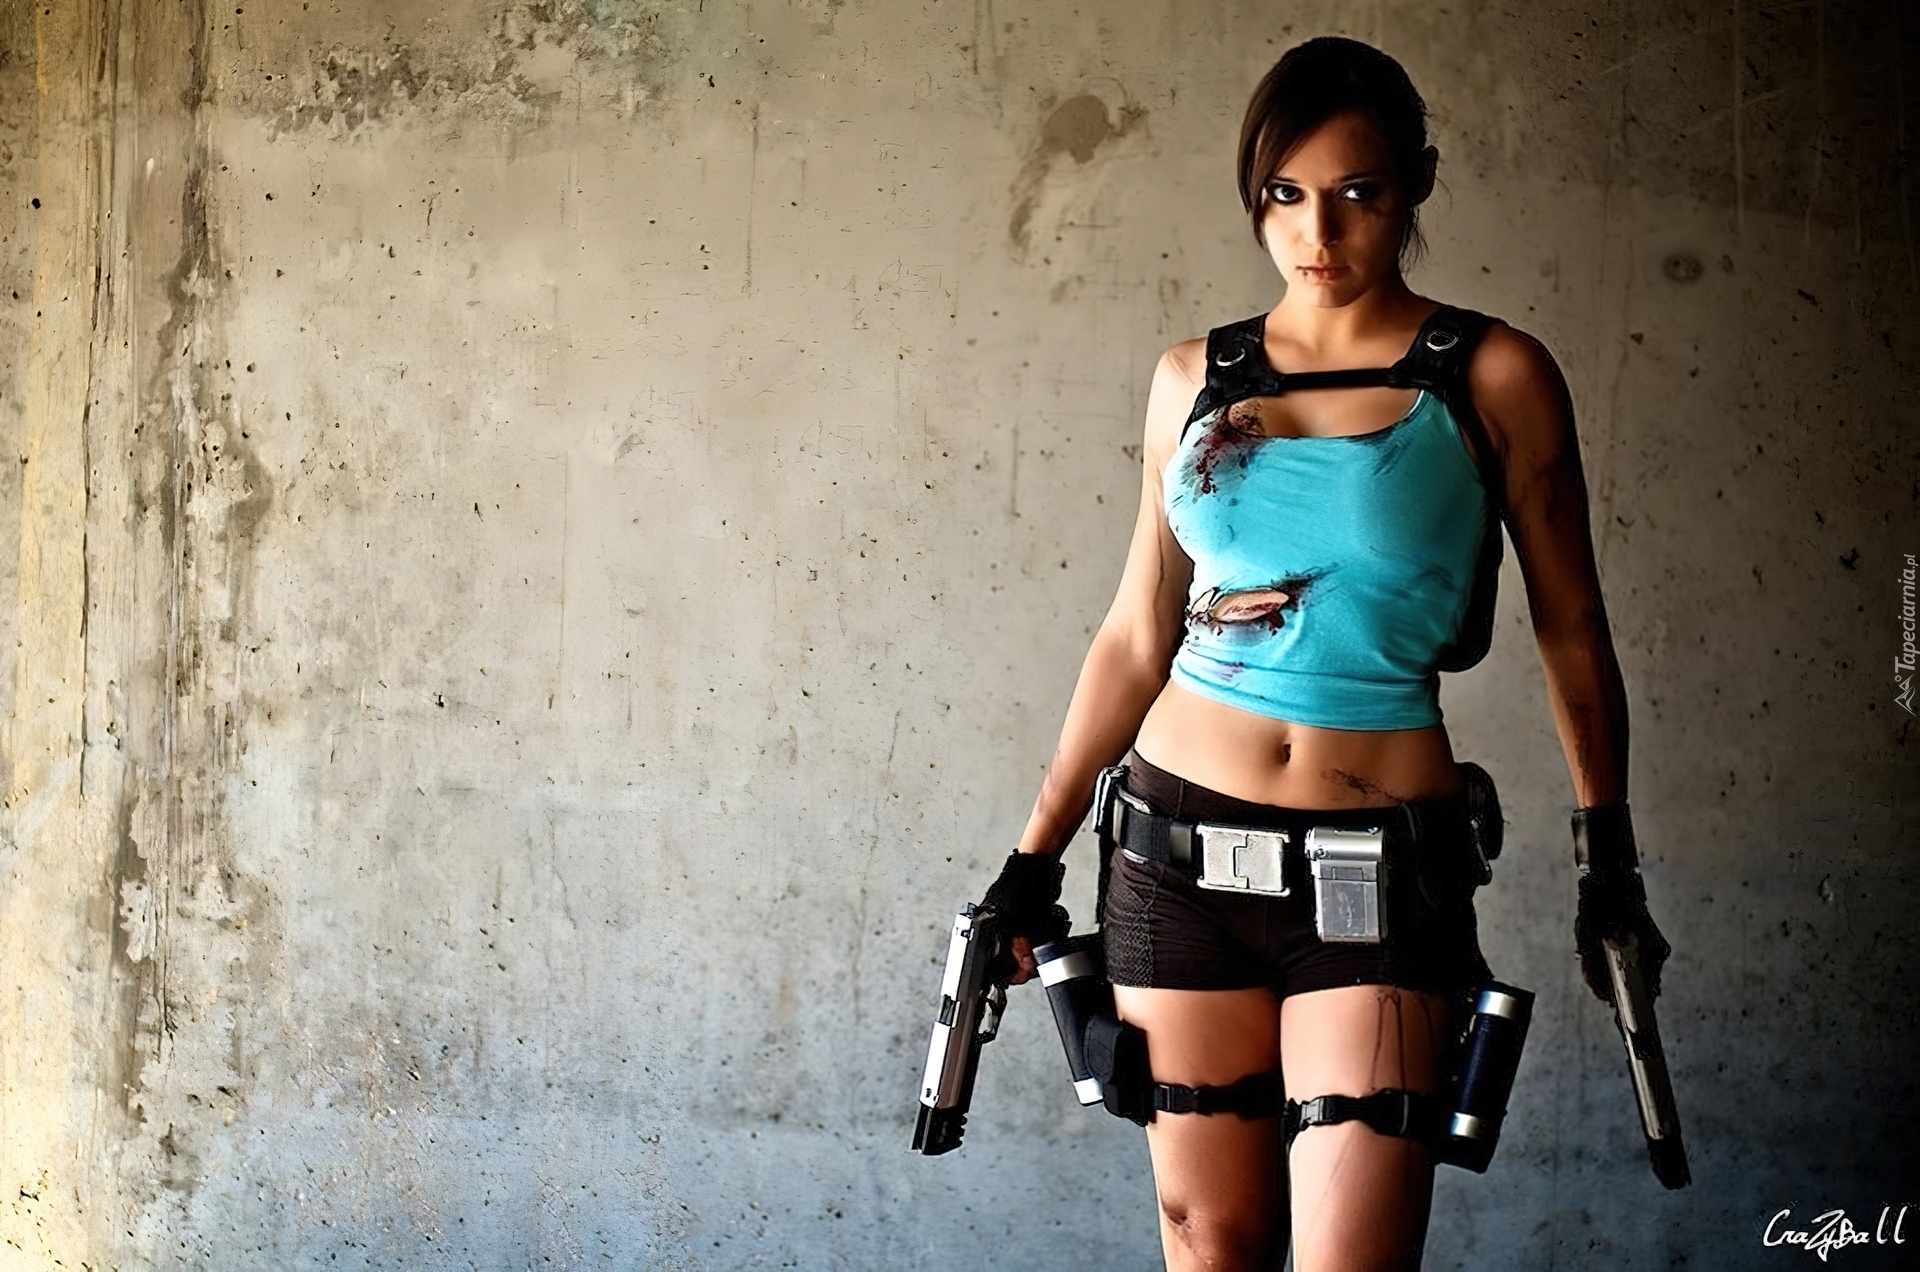 Tomb Raider, Lara Croft